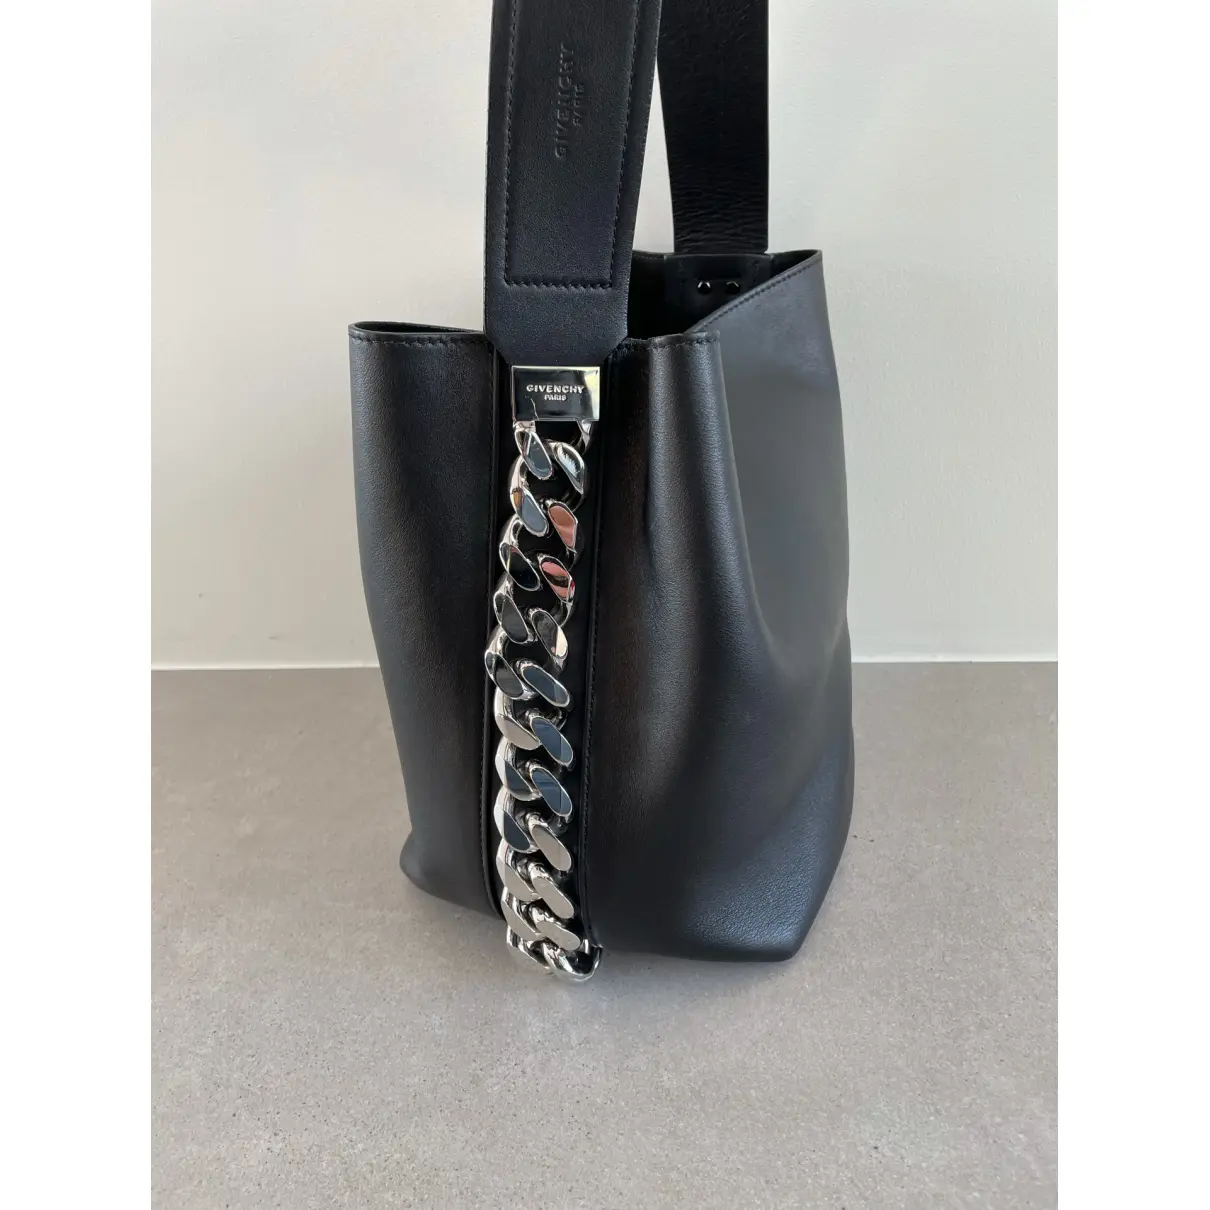 Buy Givenchy Infinity leather handbag online